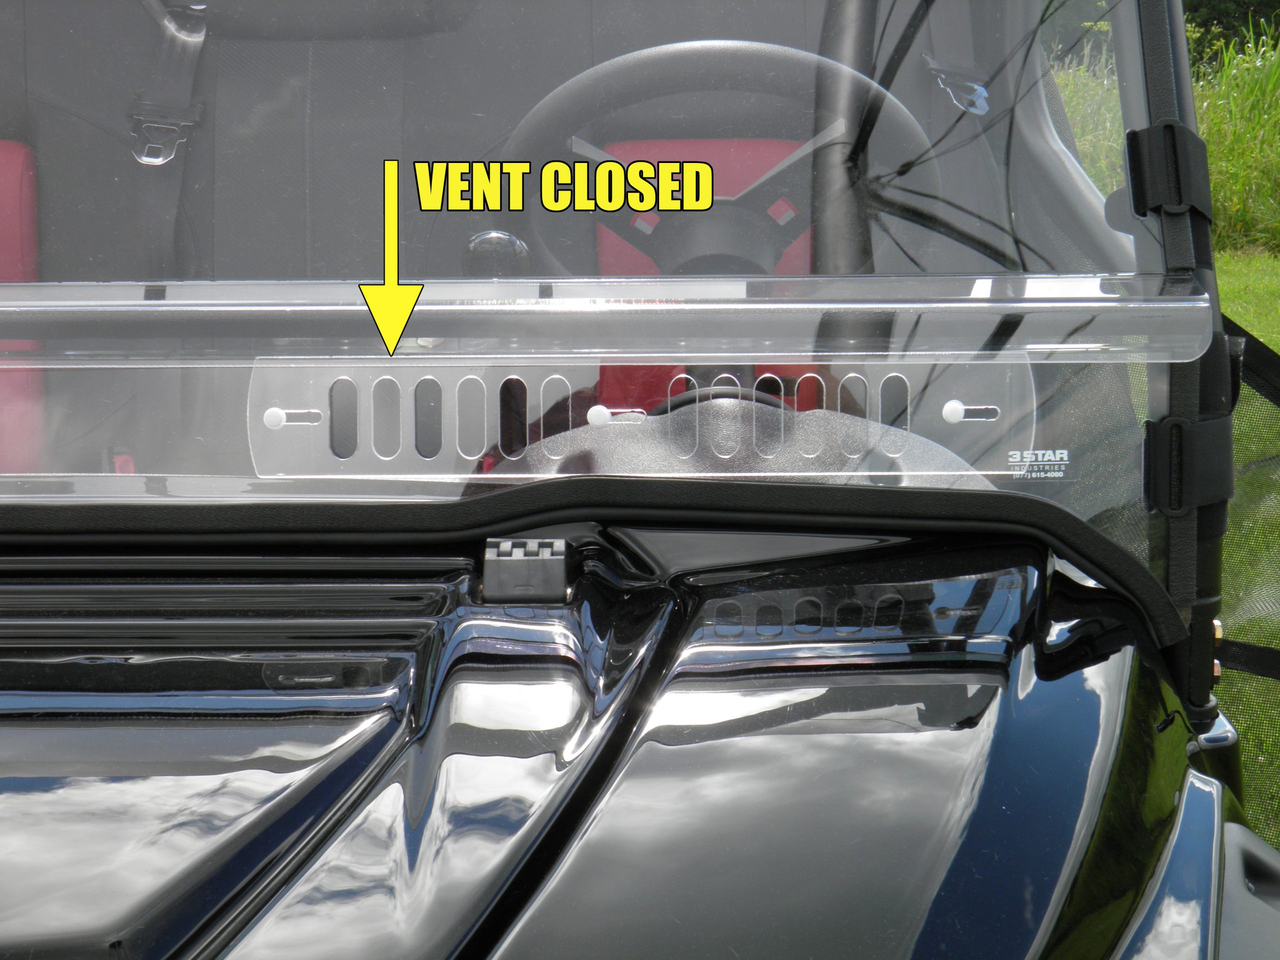 3 Star side x side Honda Pioneer 500/520 windshield vents closed